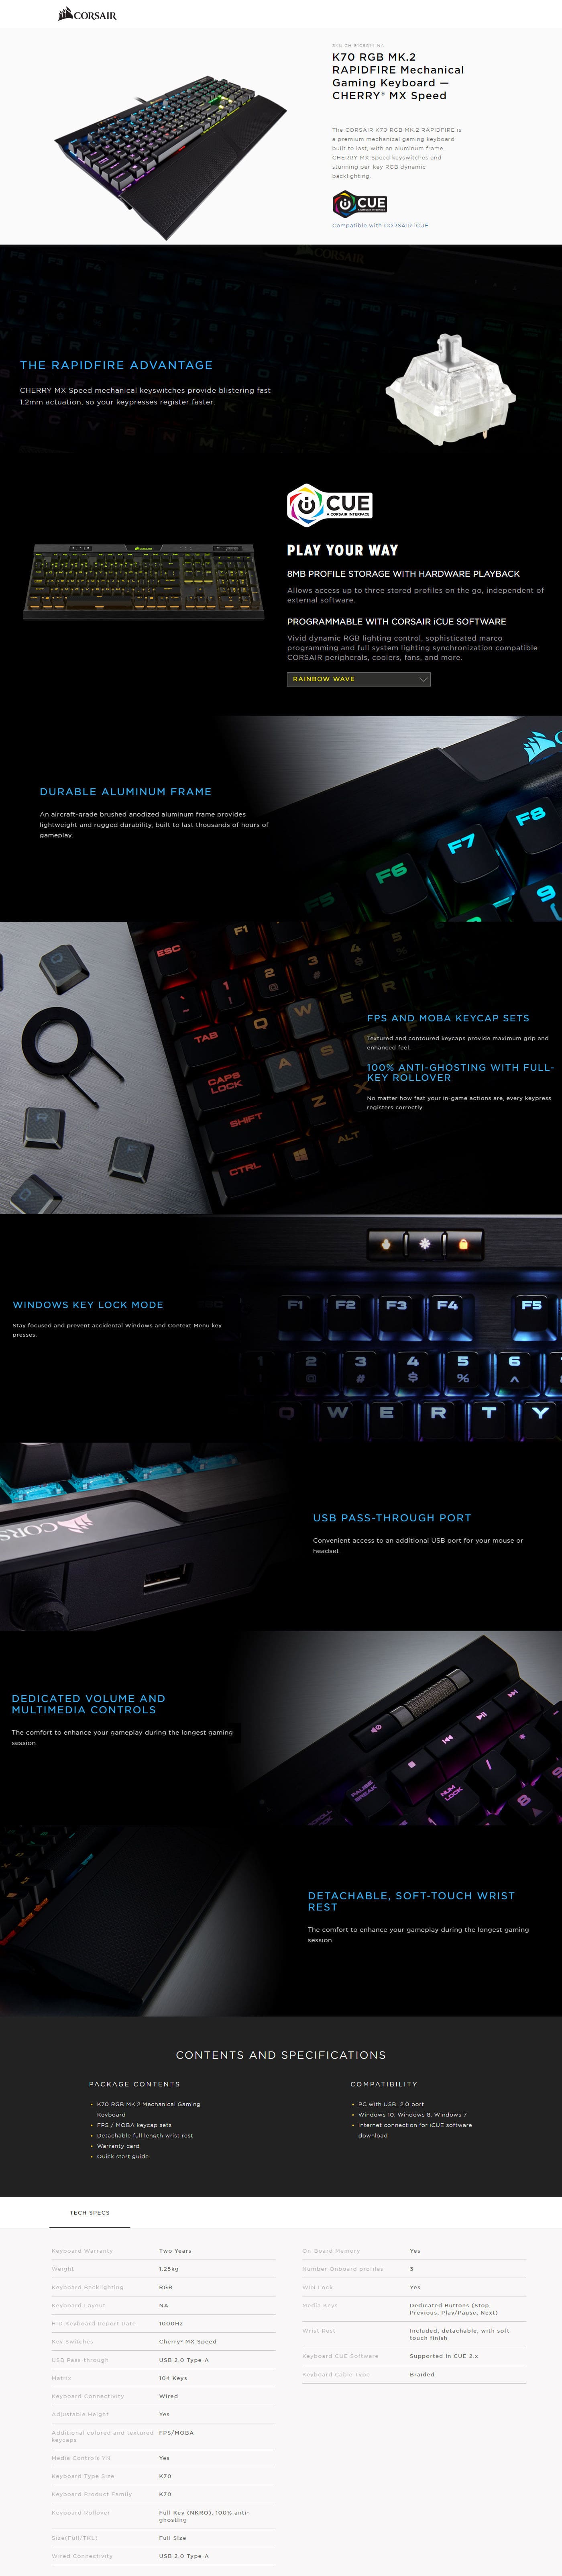  Buy Online Corsair K70 RGB MK.2 Rapidfire Mechanical Gaming Keyboard - Cherry MX Speed (CH-9109014-NA)